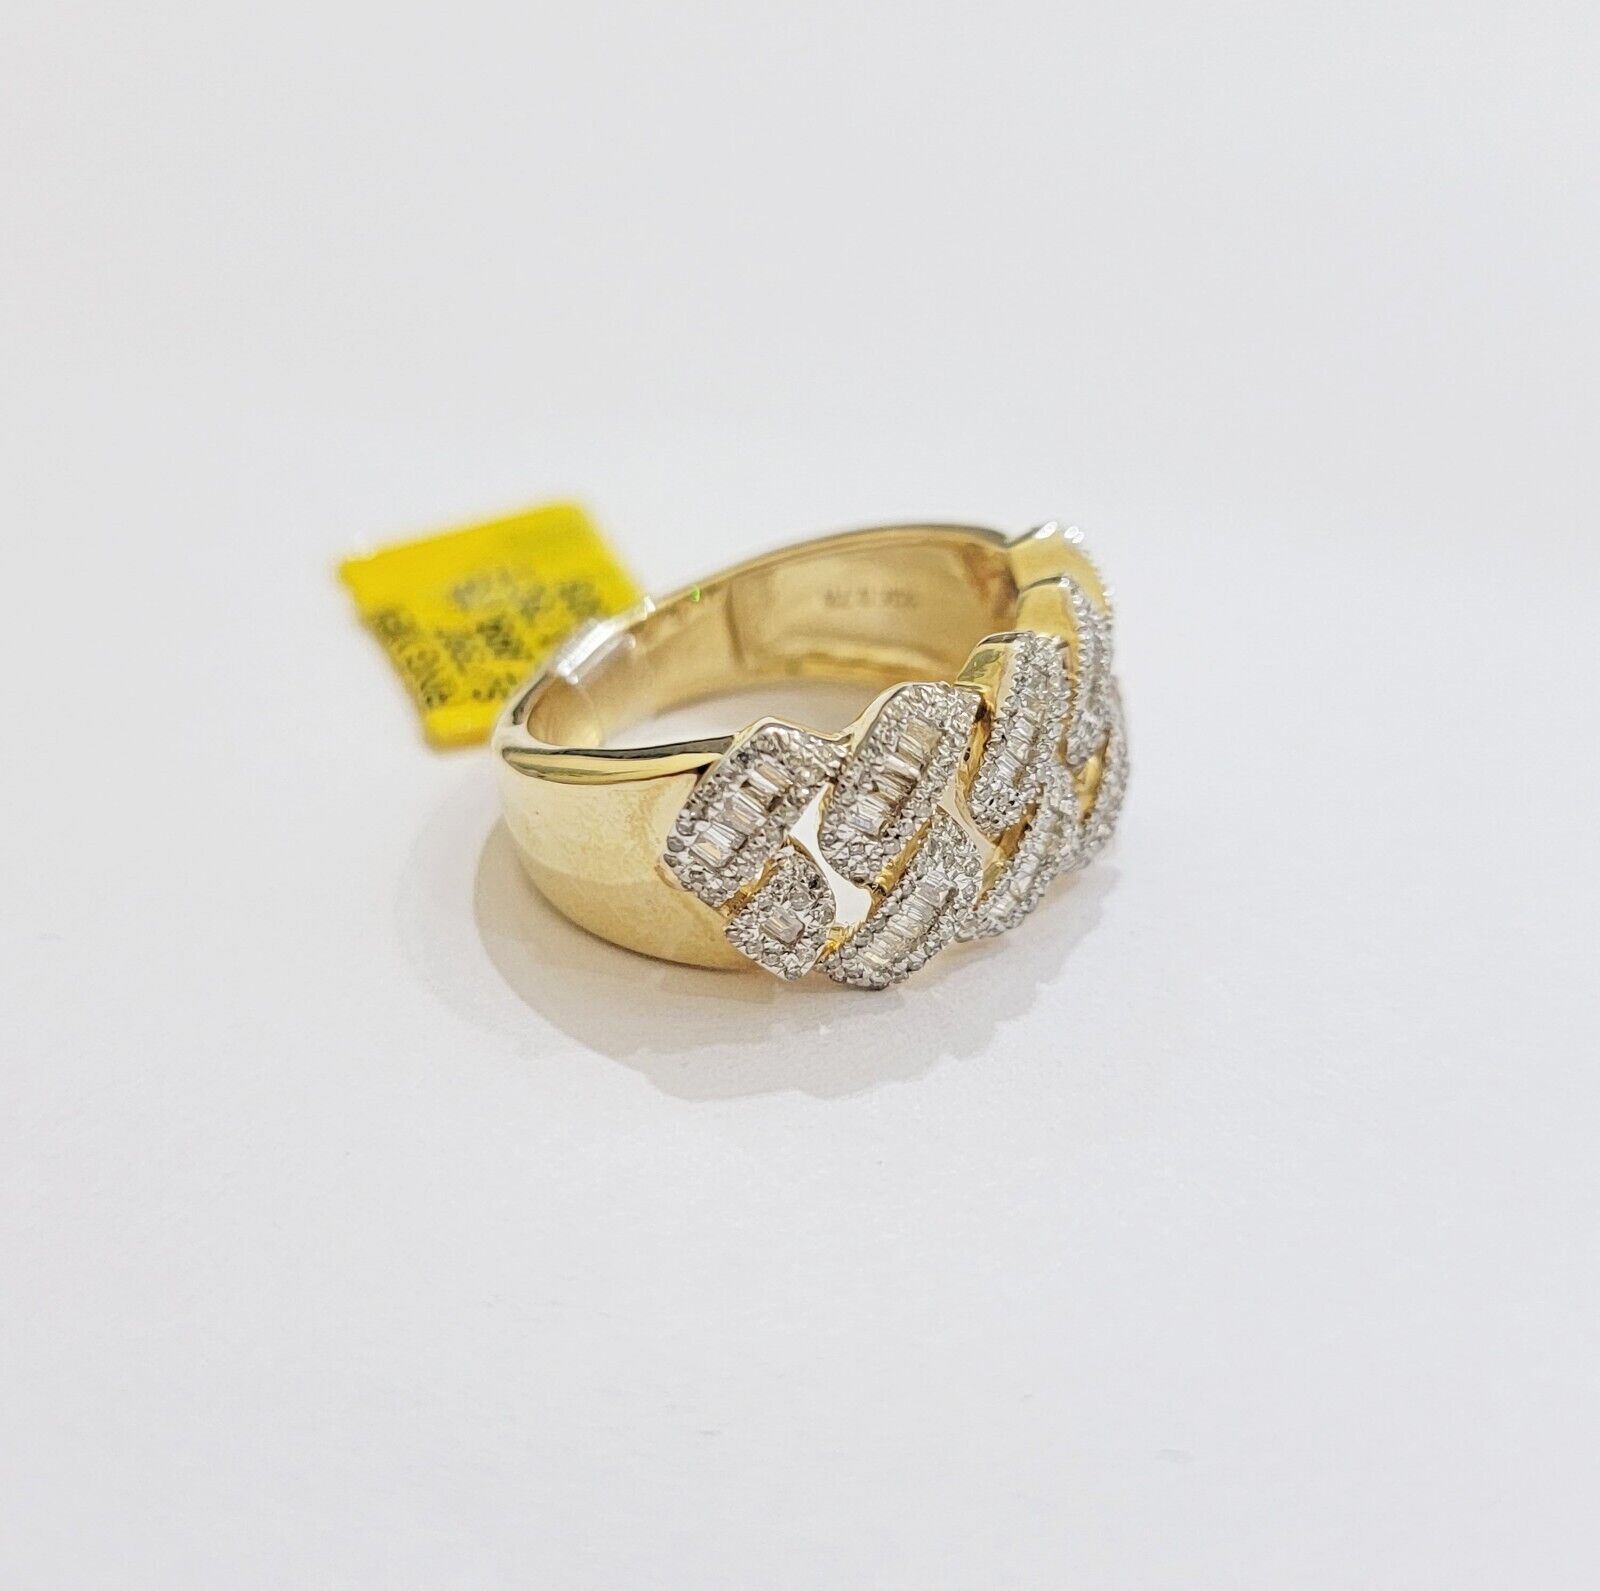 Real 10k Yellow Gold Diamond Mens Ring Cuban Link 0.78CT Natural Diamond SIZE 10